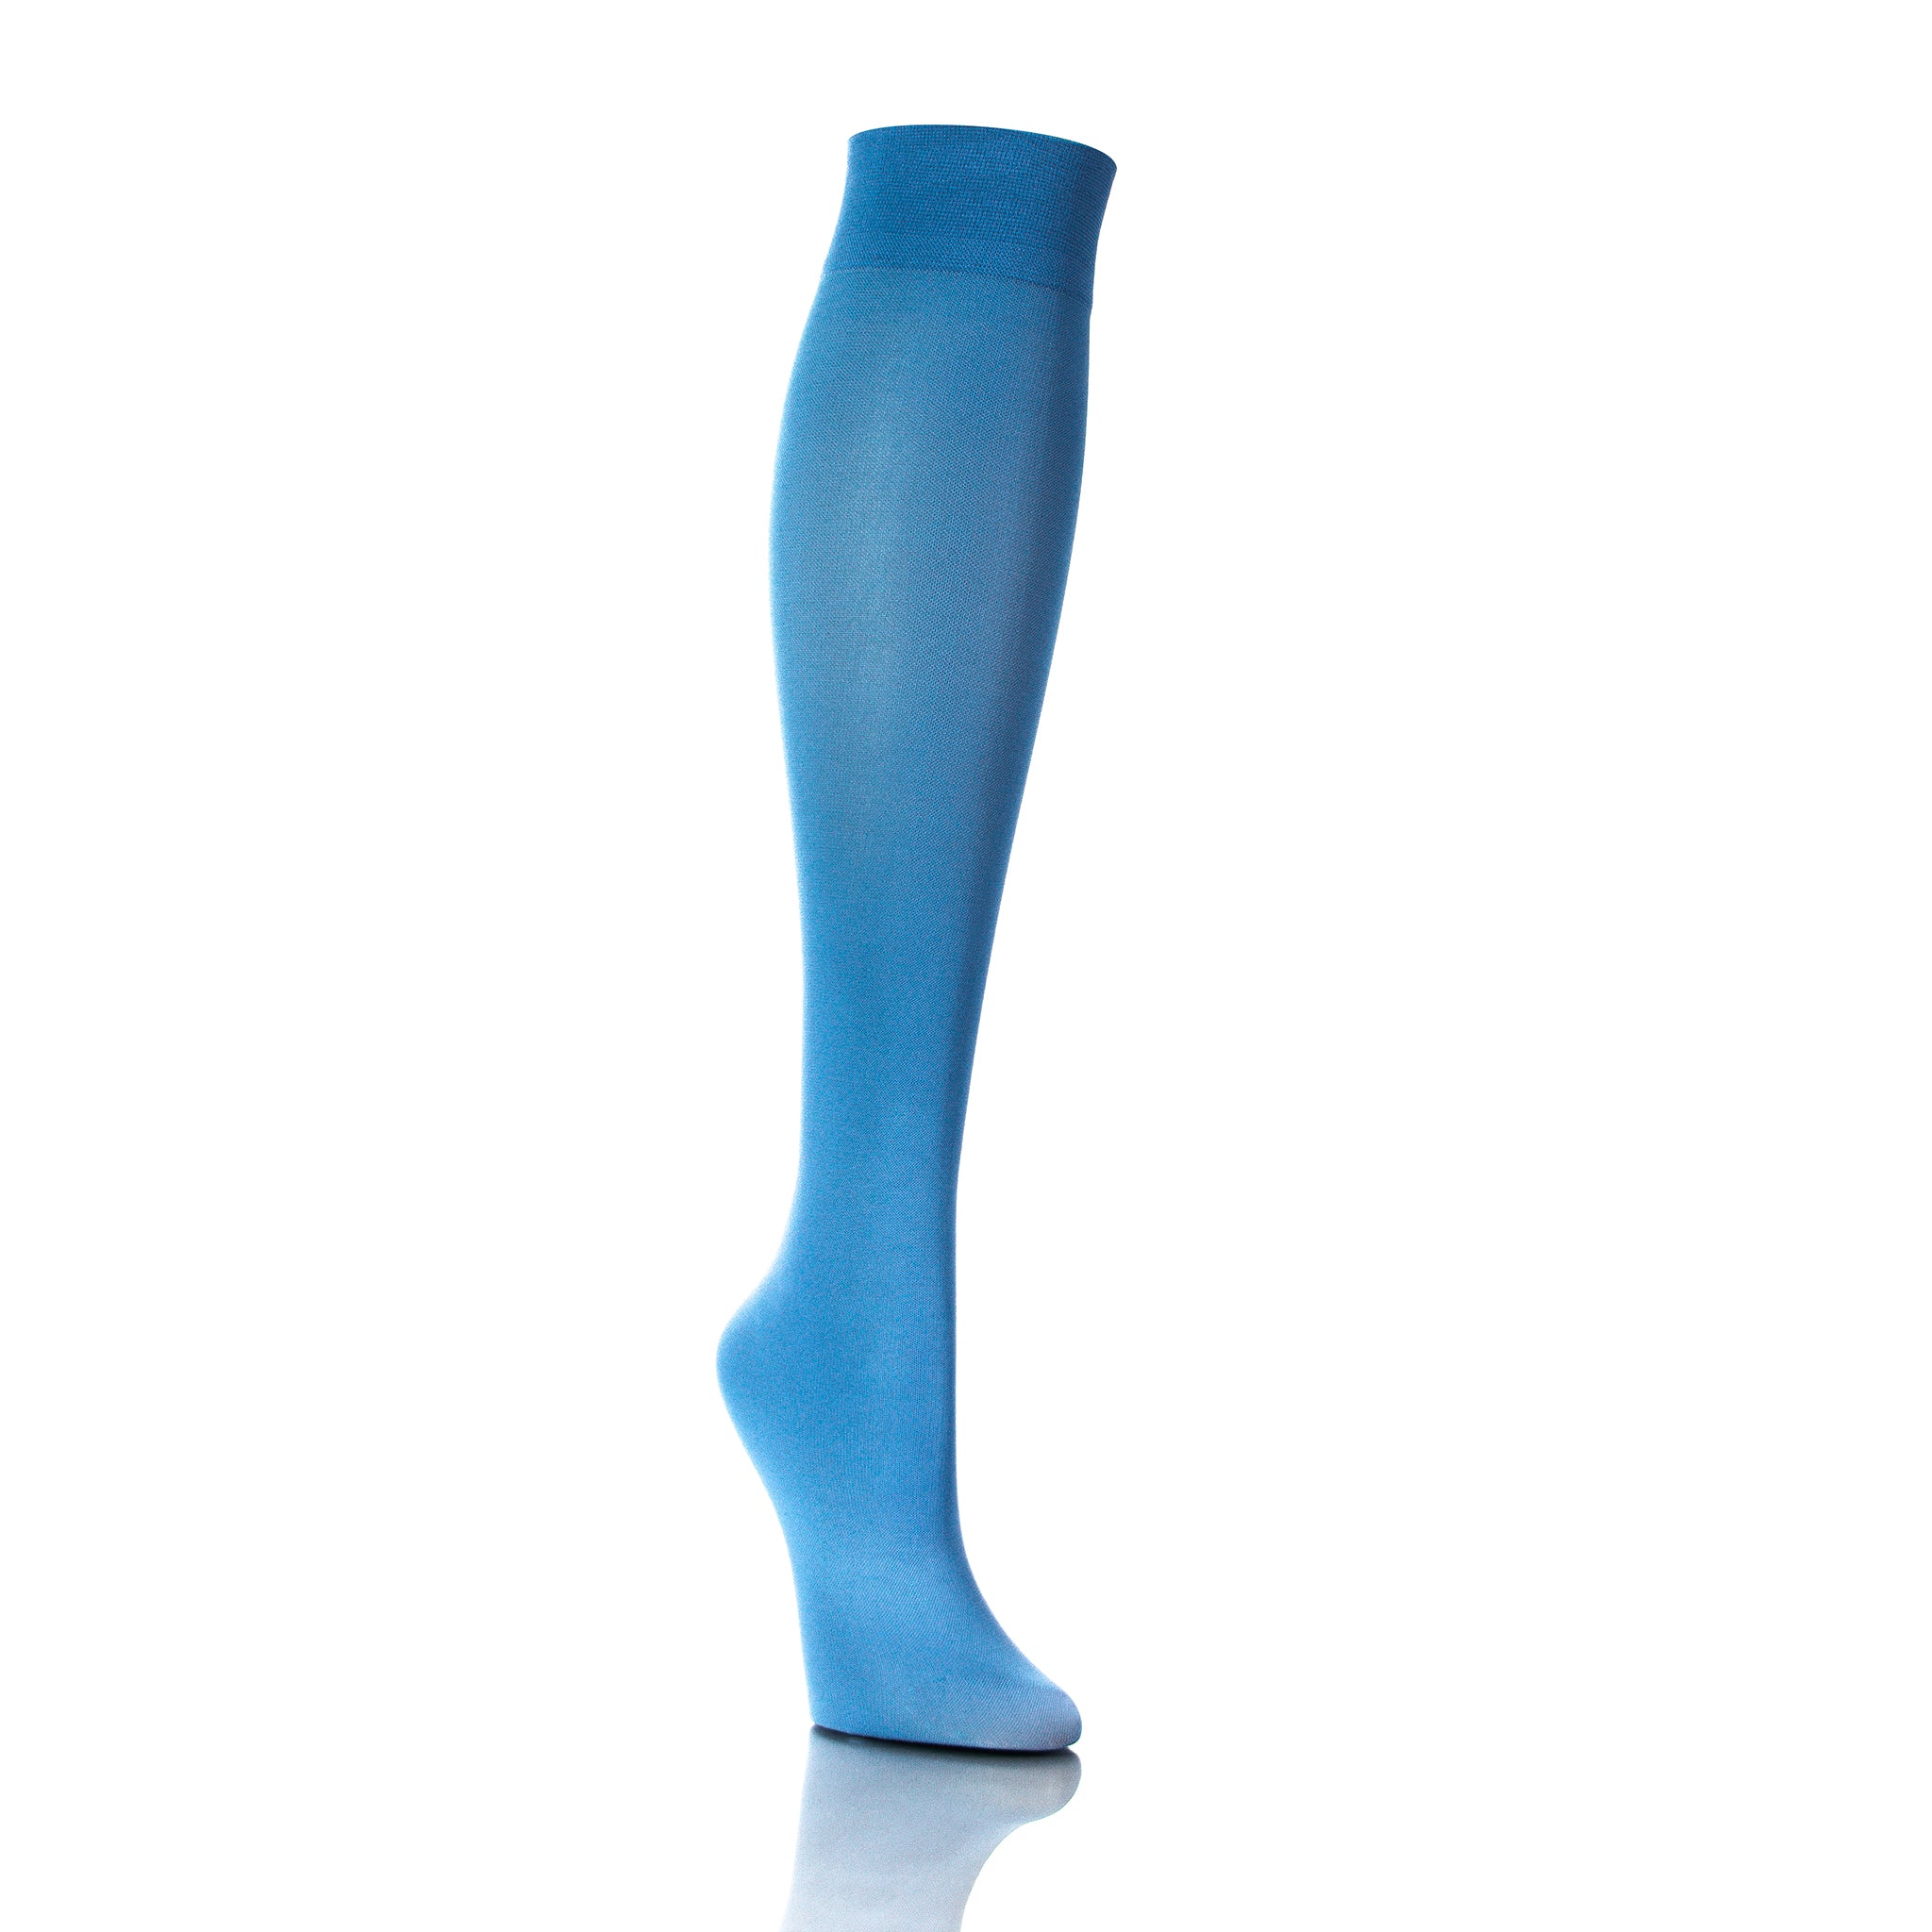 Colourful Compression Socks - 20 30 mmHg - Knee High - Bue Sky Color - Softmedi - Diagonal View